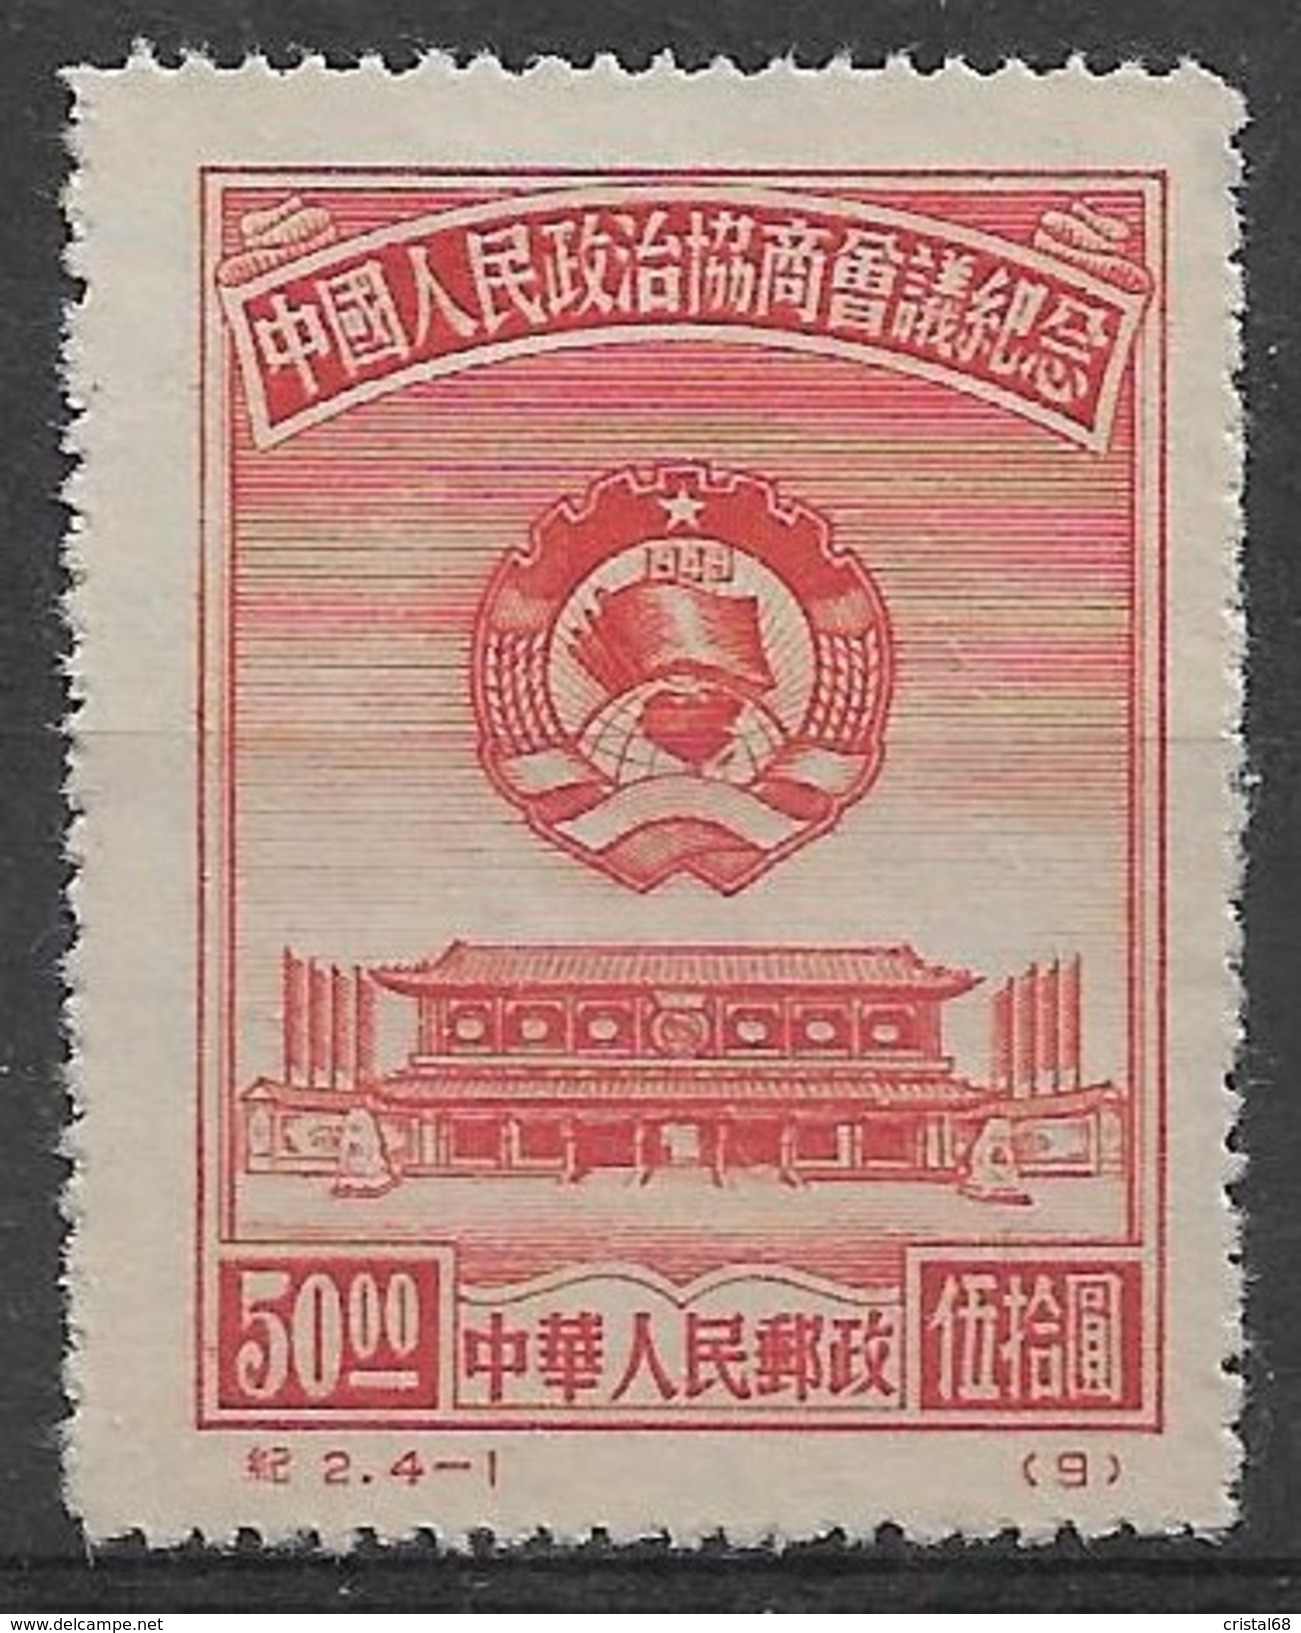 CHINE 1950 - Timbre N°827 - Neuf - Réimpressions Officielles